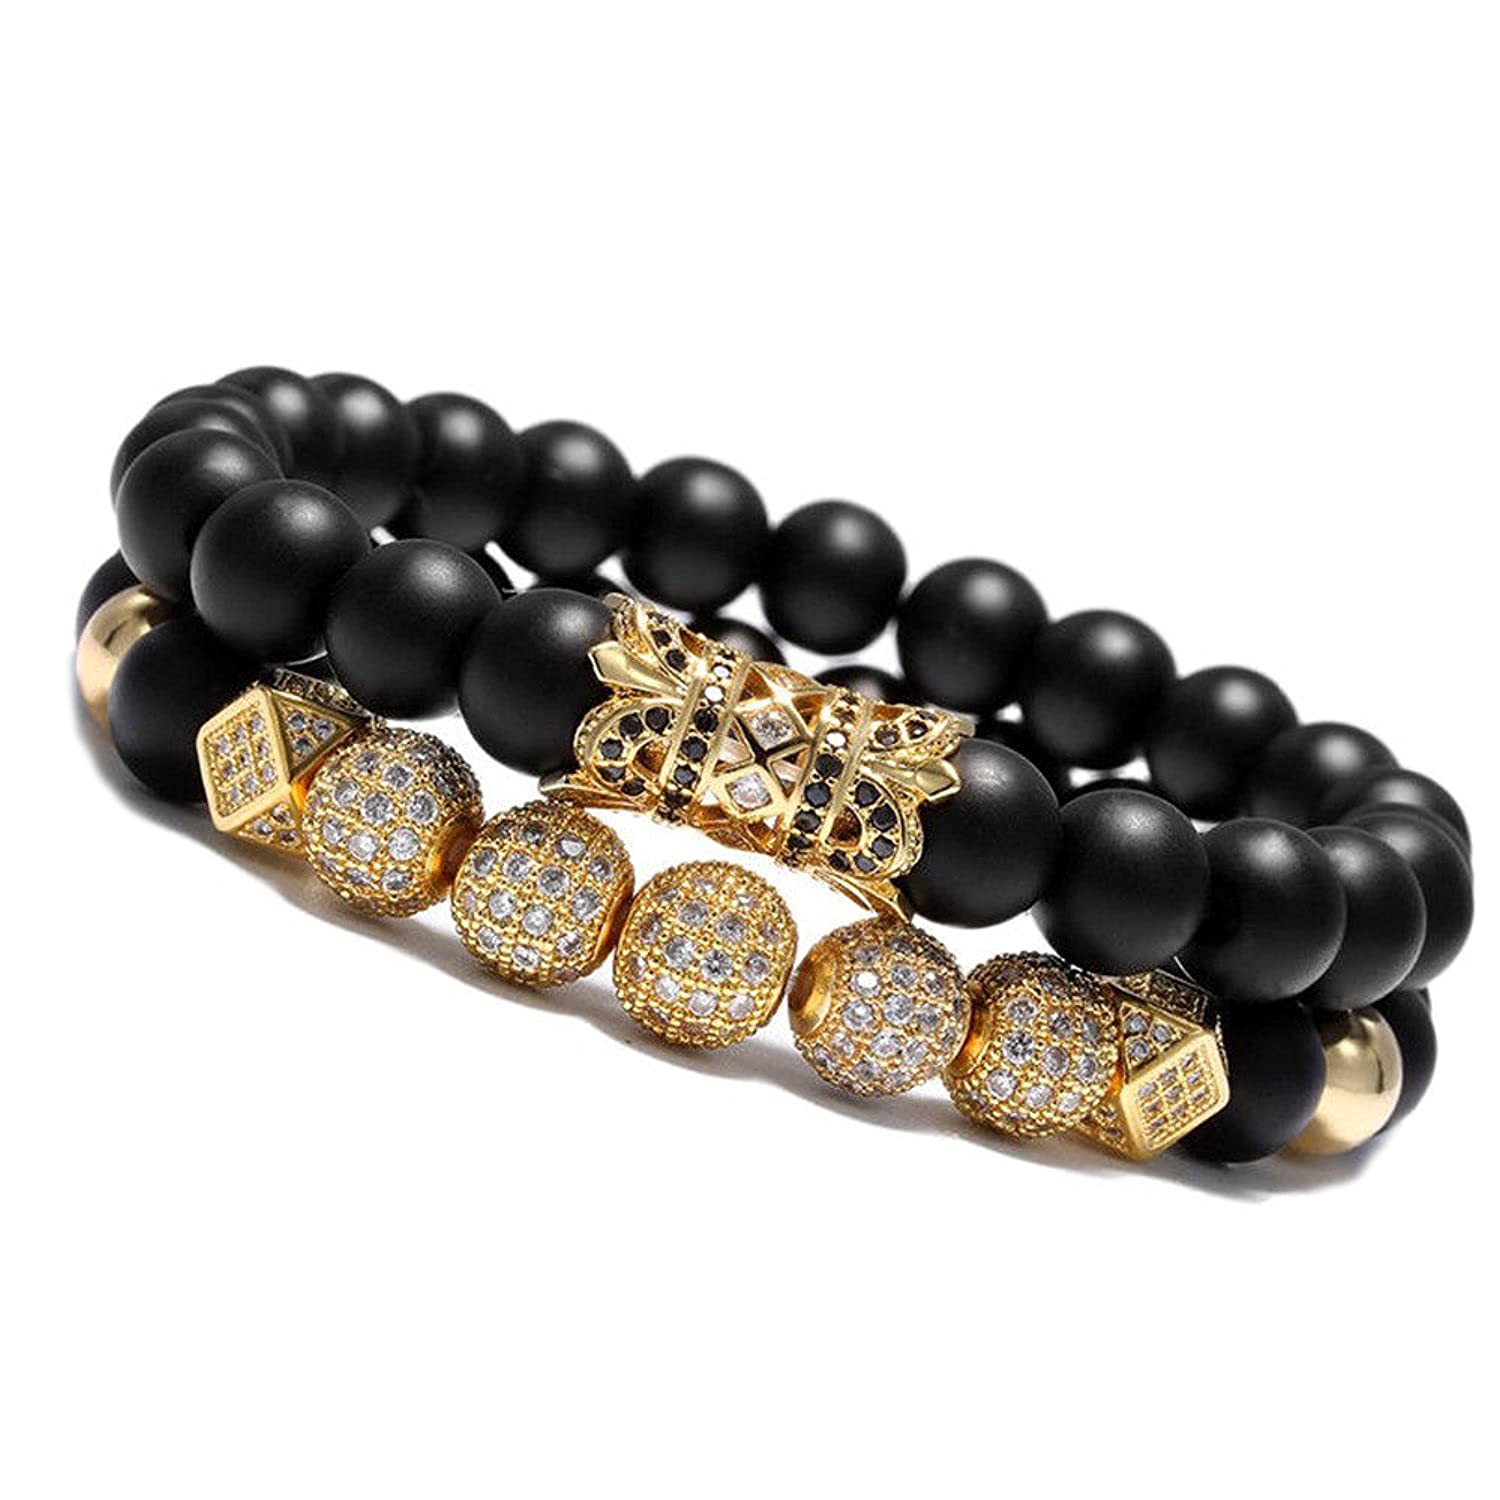 WFYOU 8mm Charm Beads Bracelet for Men Women Black Matte Onyx Natural Stone Beads, 7.5